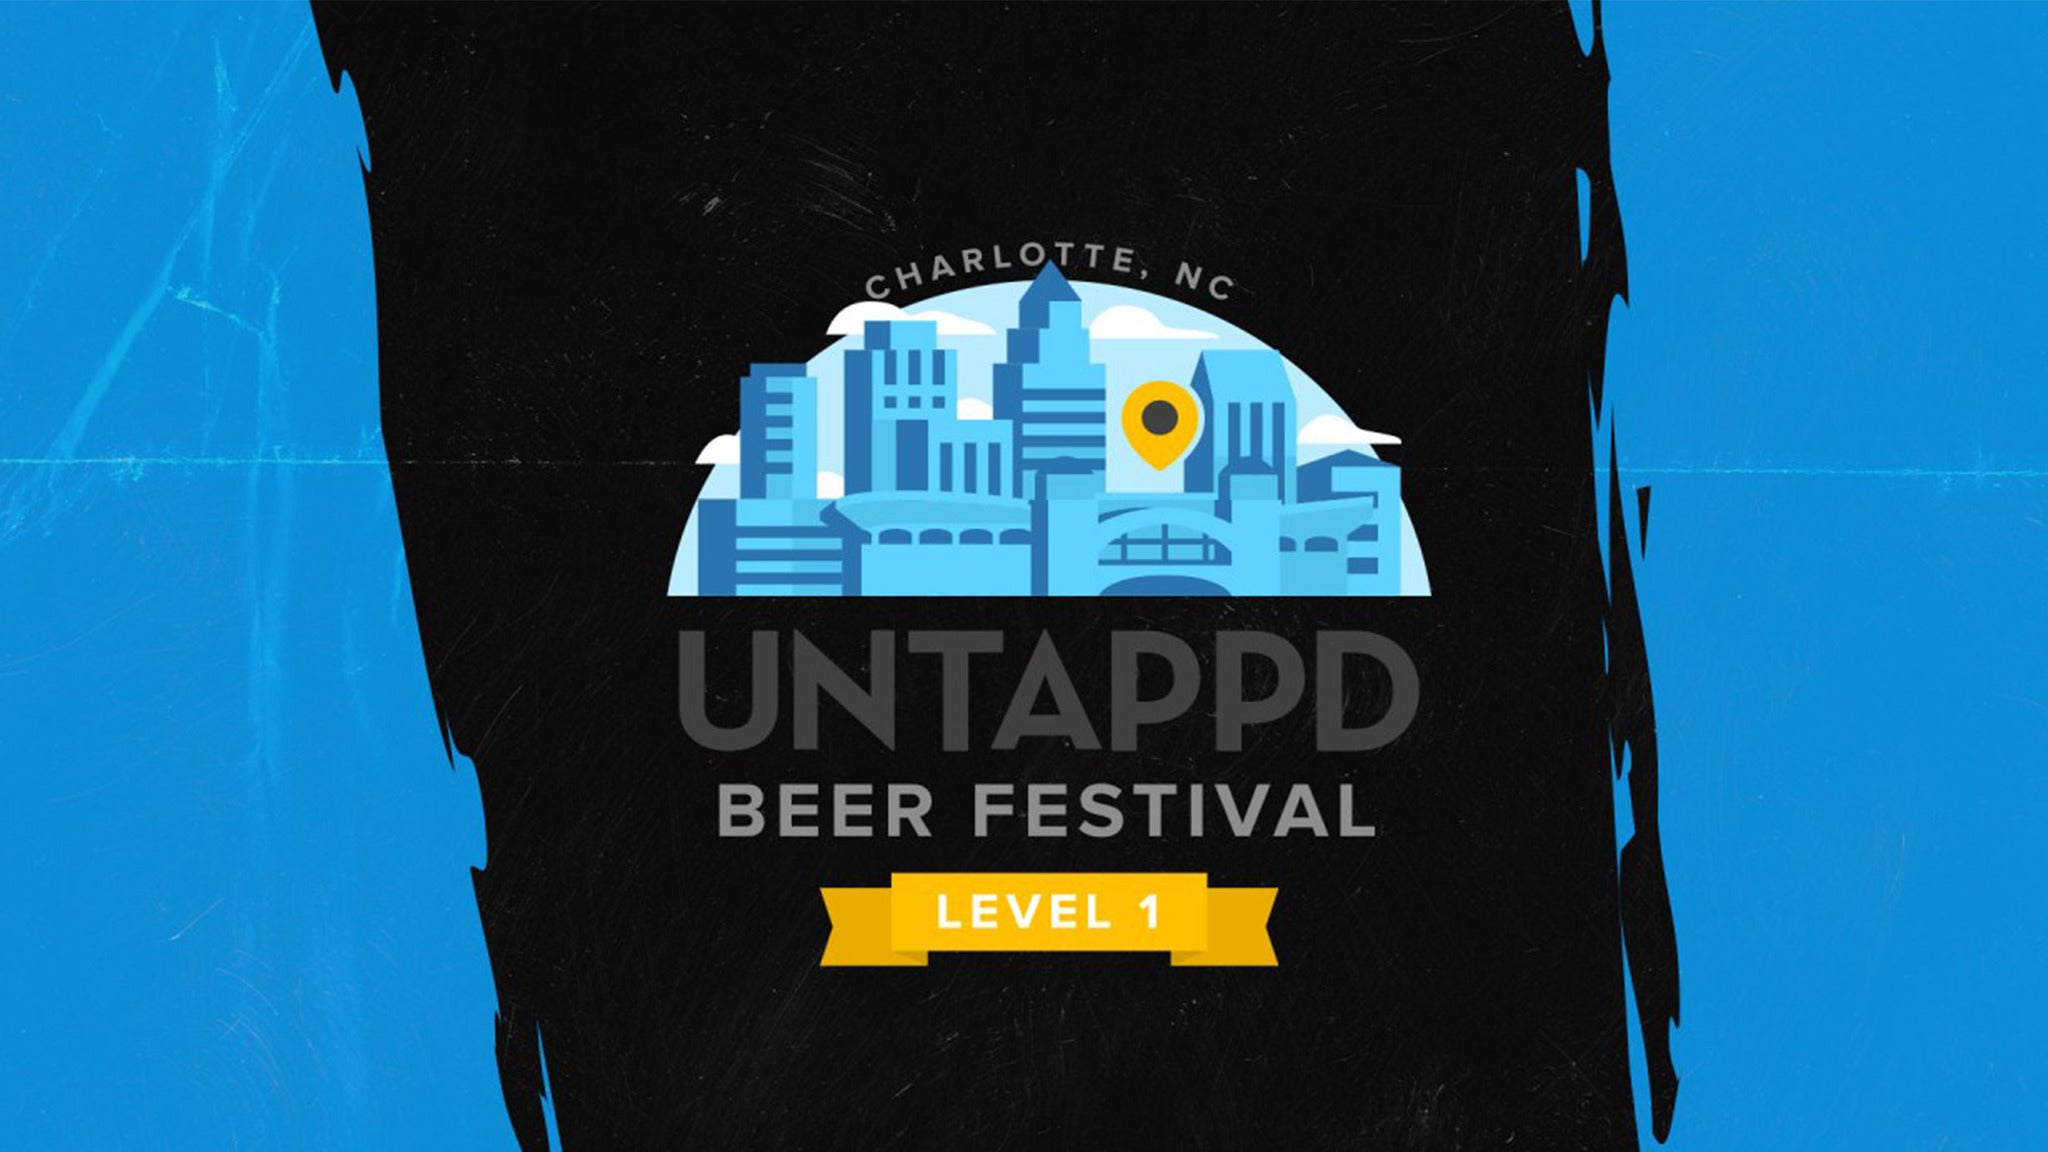 Untappd Beer Festival presale information on freepresalepasswords.com